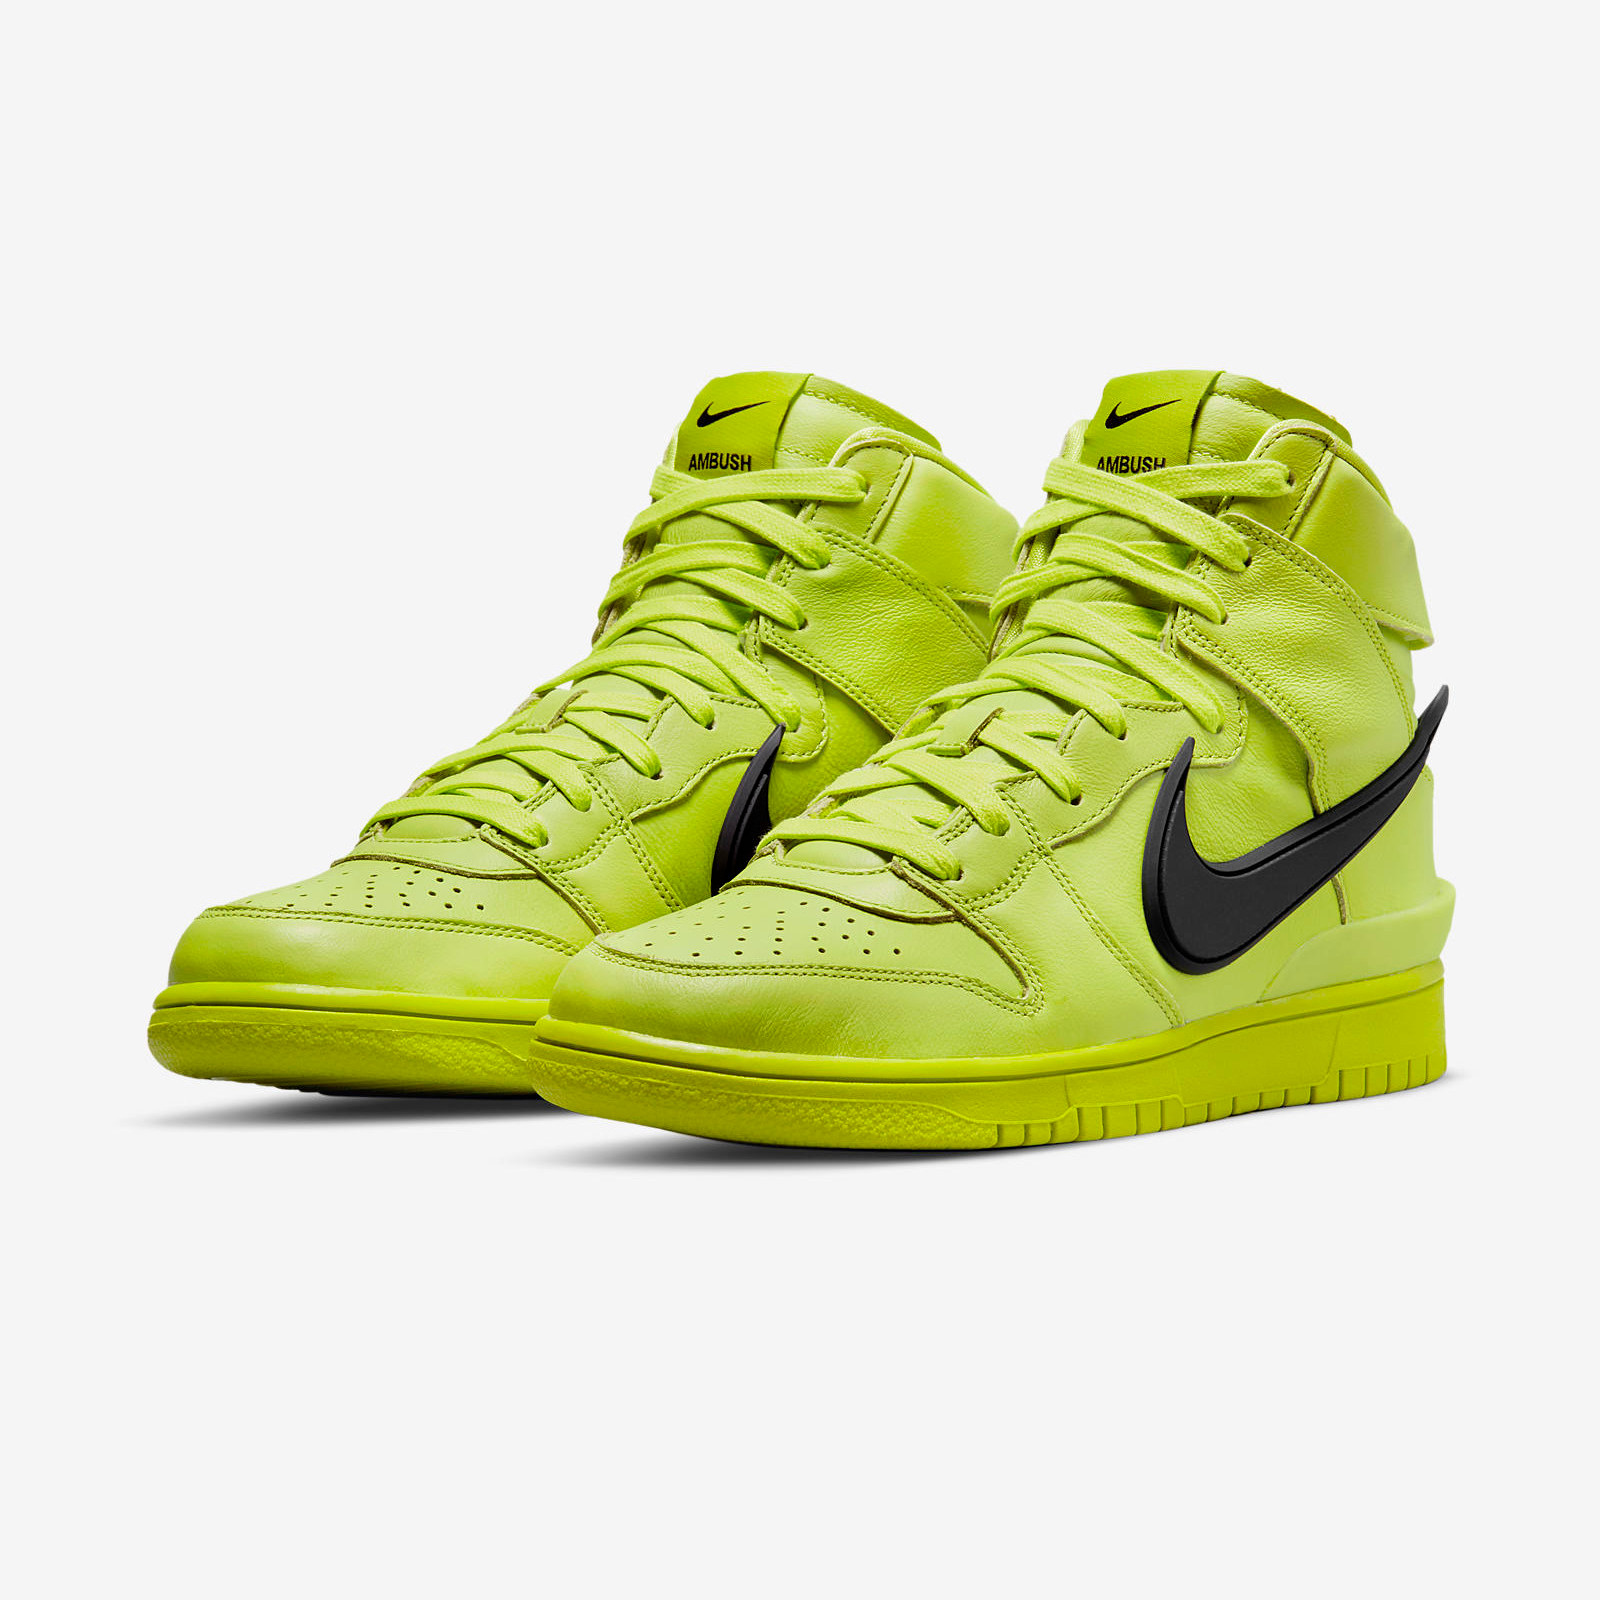 Nike x AMBUSH
Dunk High
« Flash Lime »